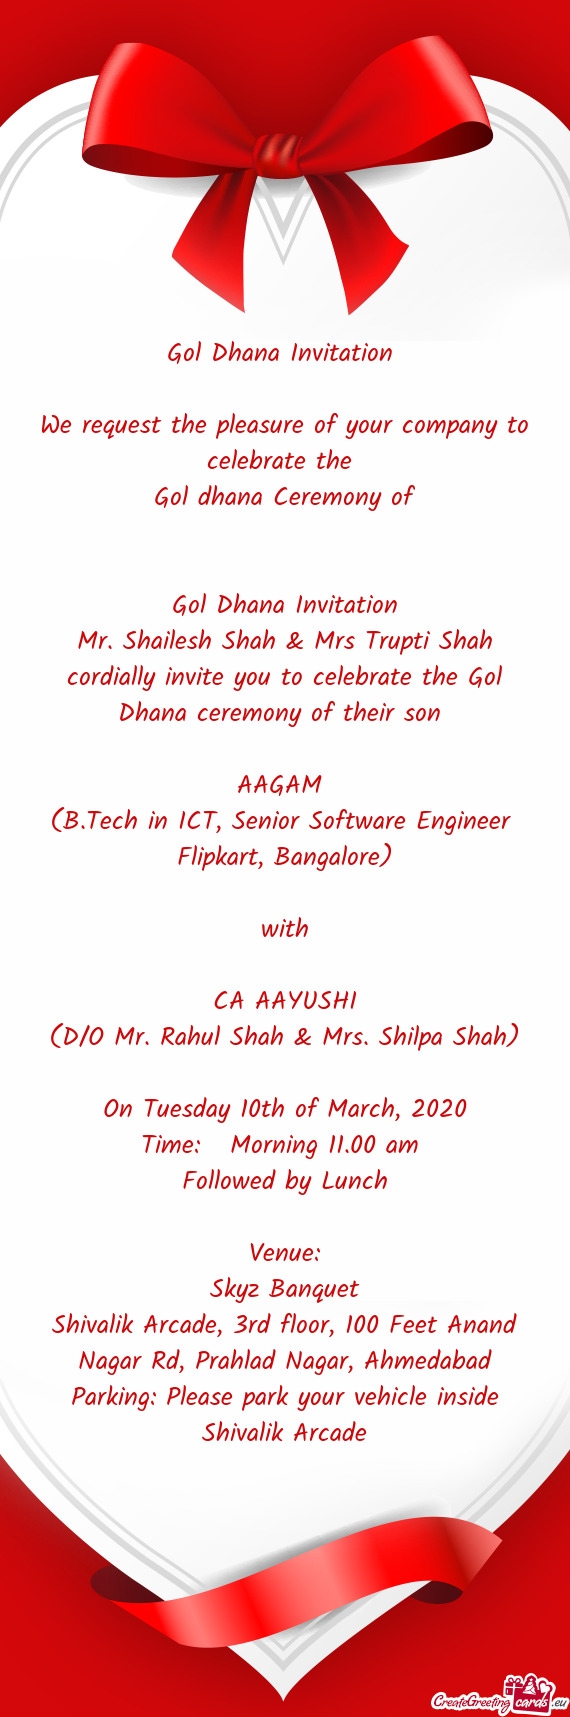 (B.Tech in ICT, Senior Software Engineer Flipkart, Bangalore)